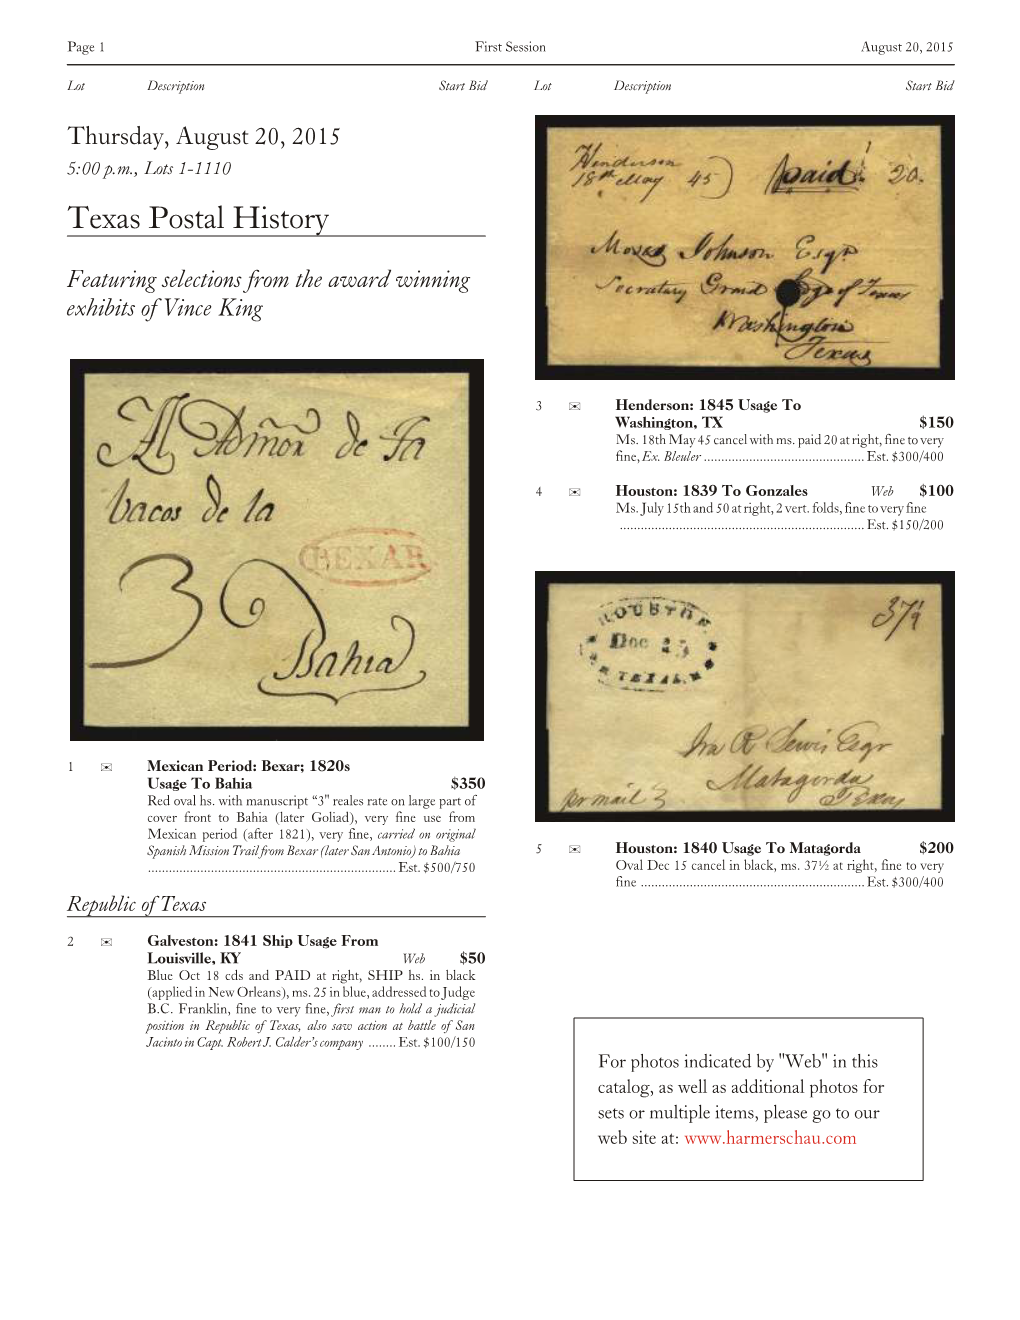 Texas Postal History